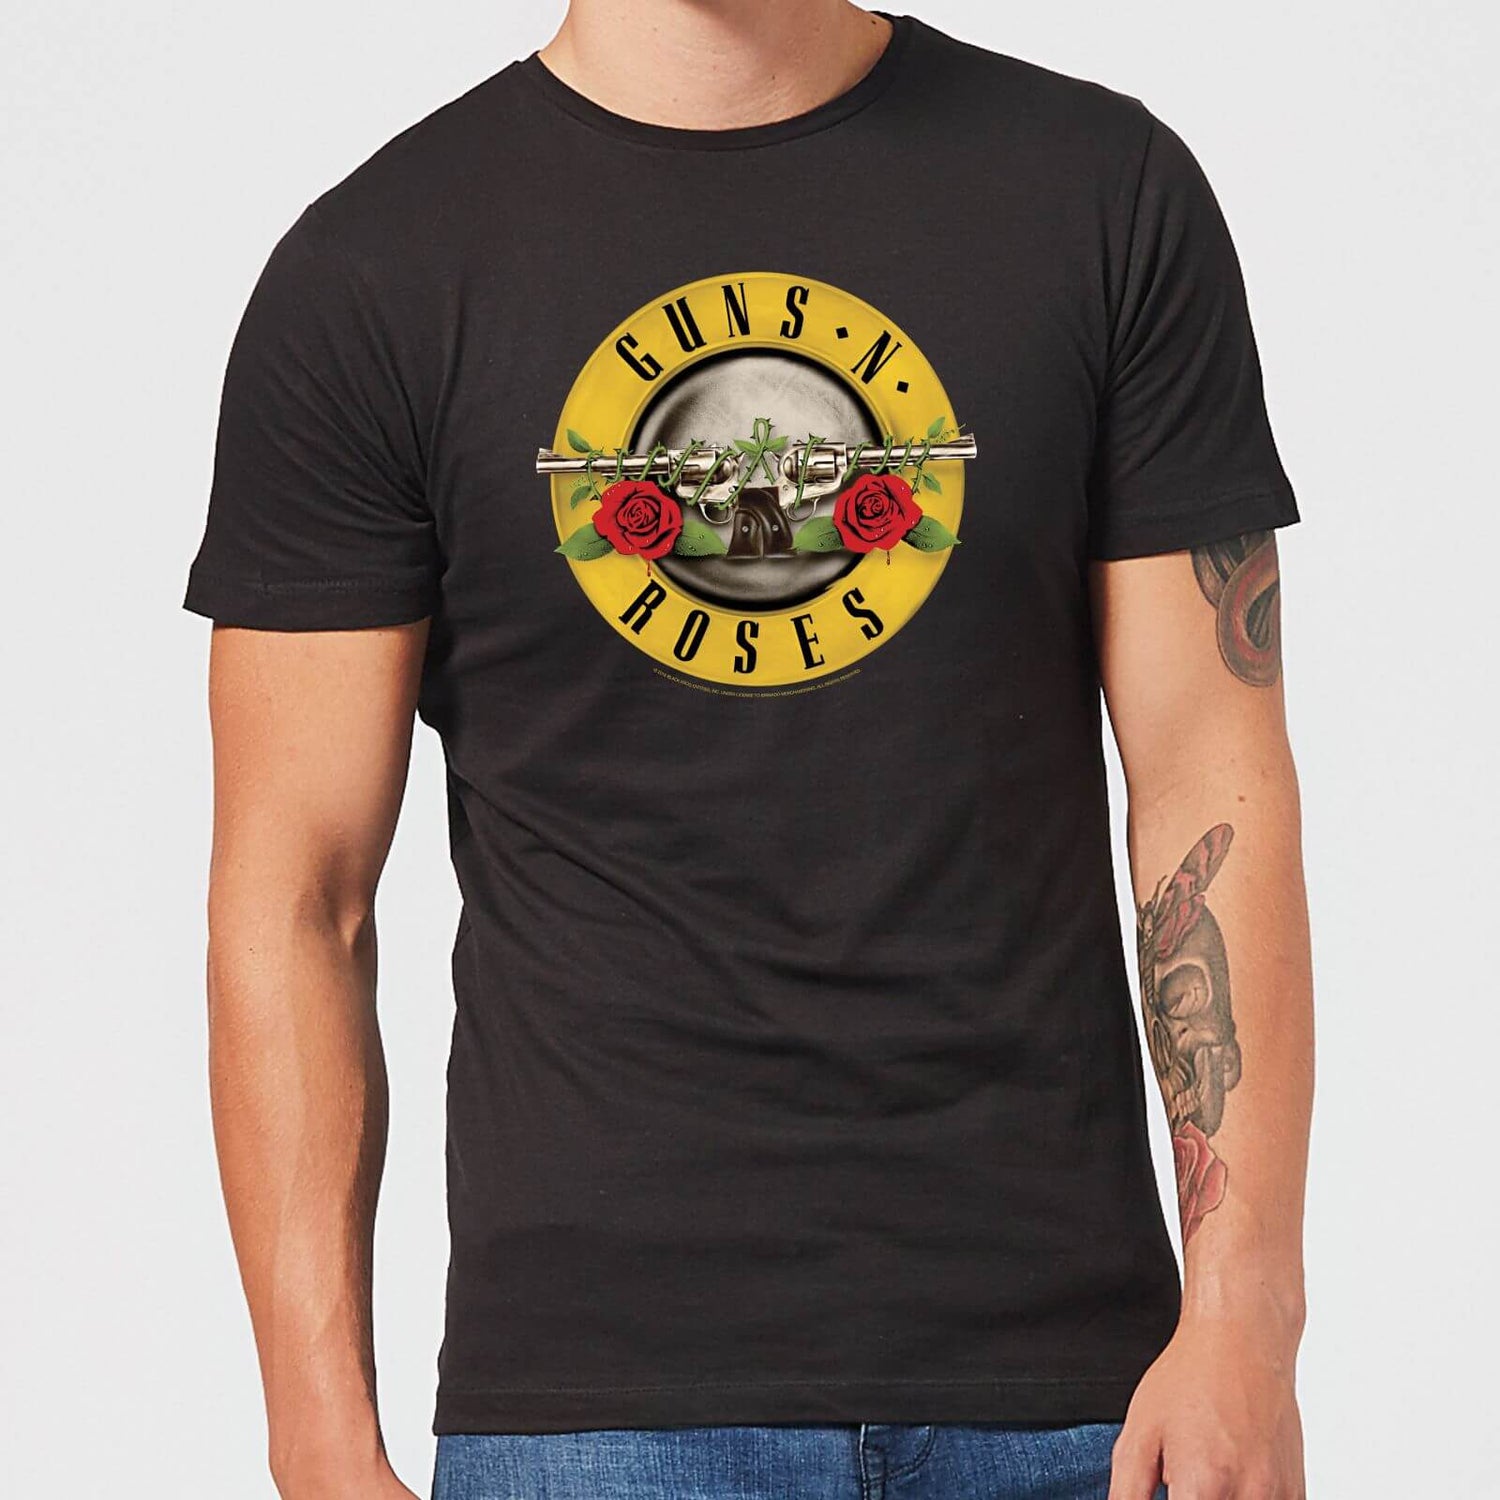 Guns N' Roses Tシャツ